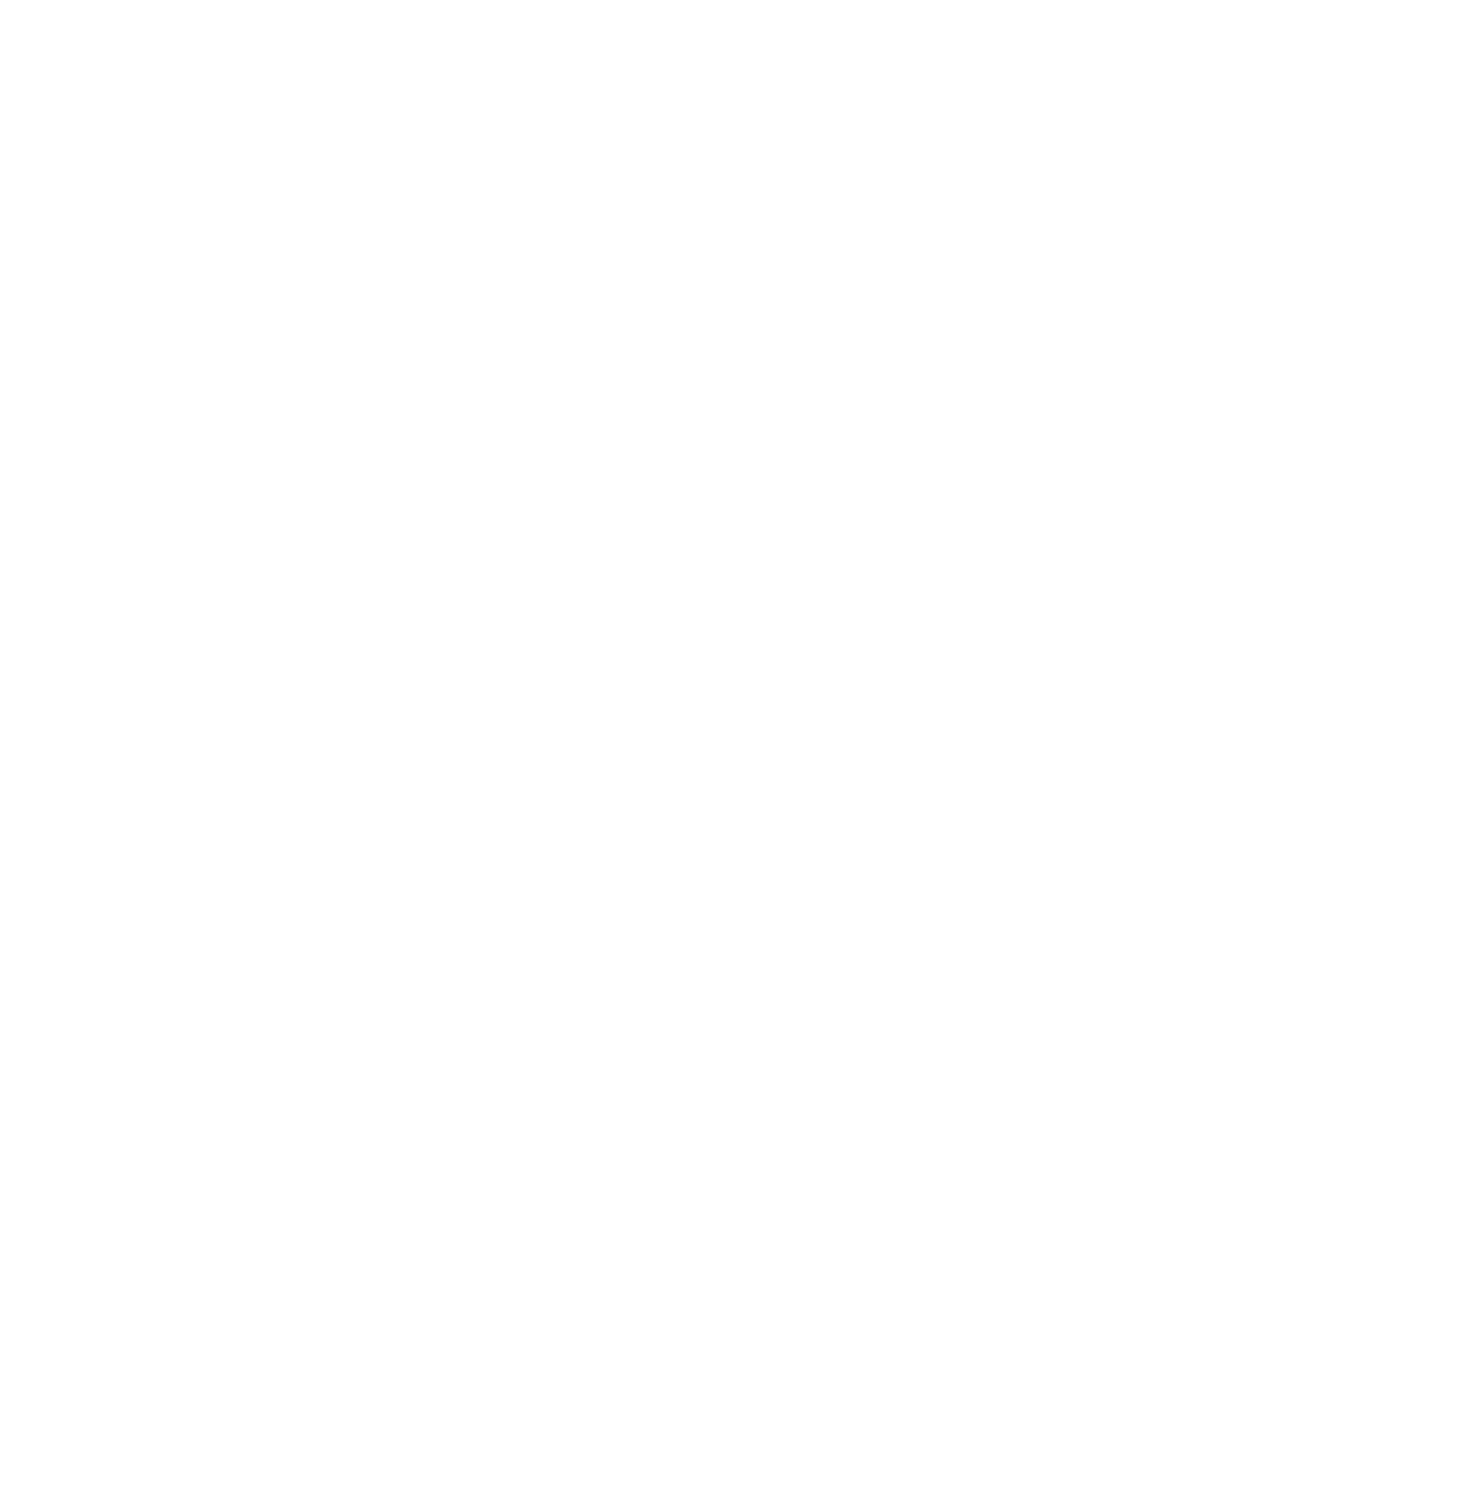 TILT: THE SWEET SCIENCE OF PINBALL